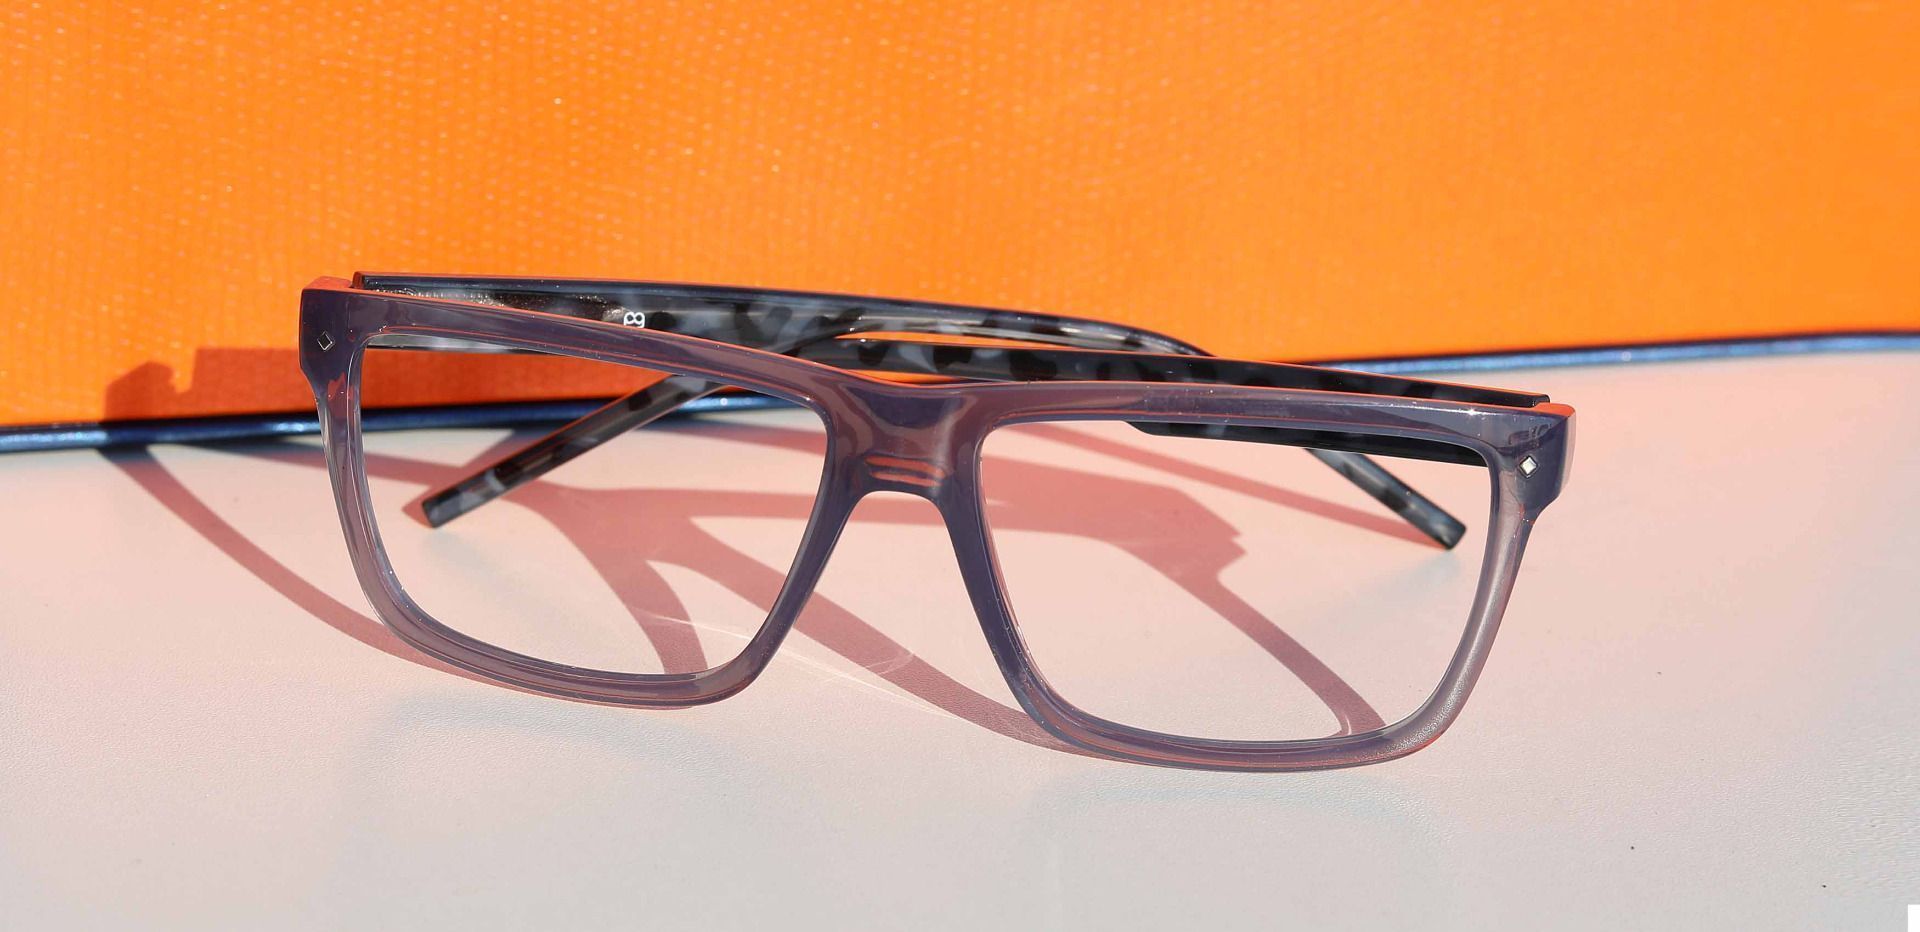 Carey Rectangle Progressive Glasses - Gray